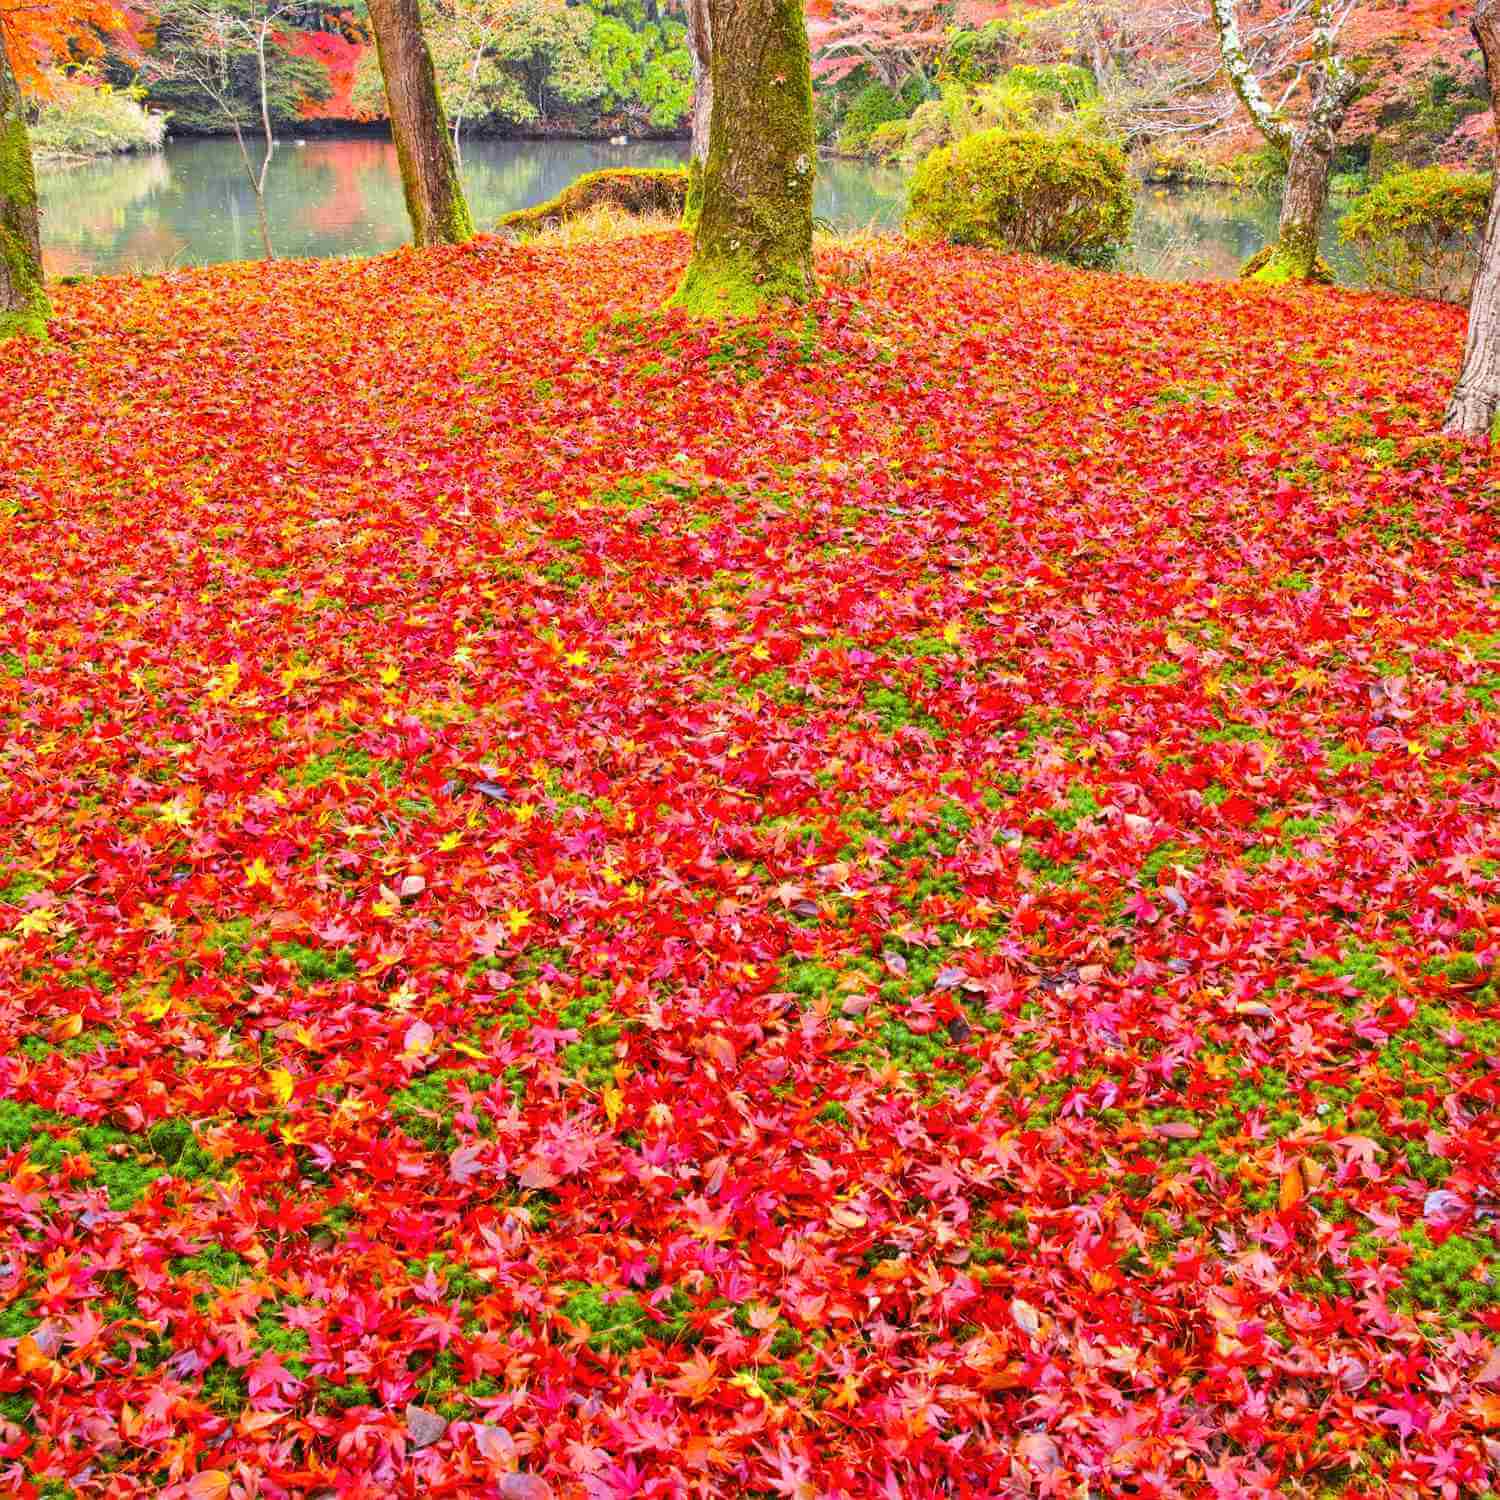 Autumn Leaves in Kyoto = AdobeStock 4